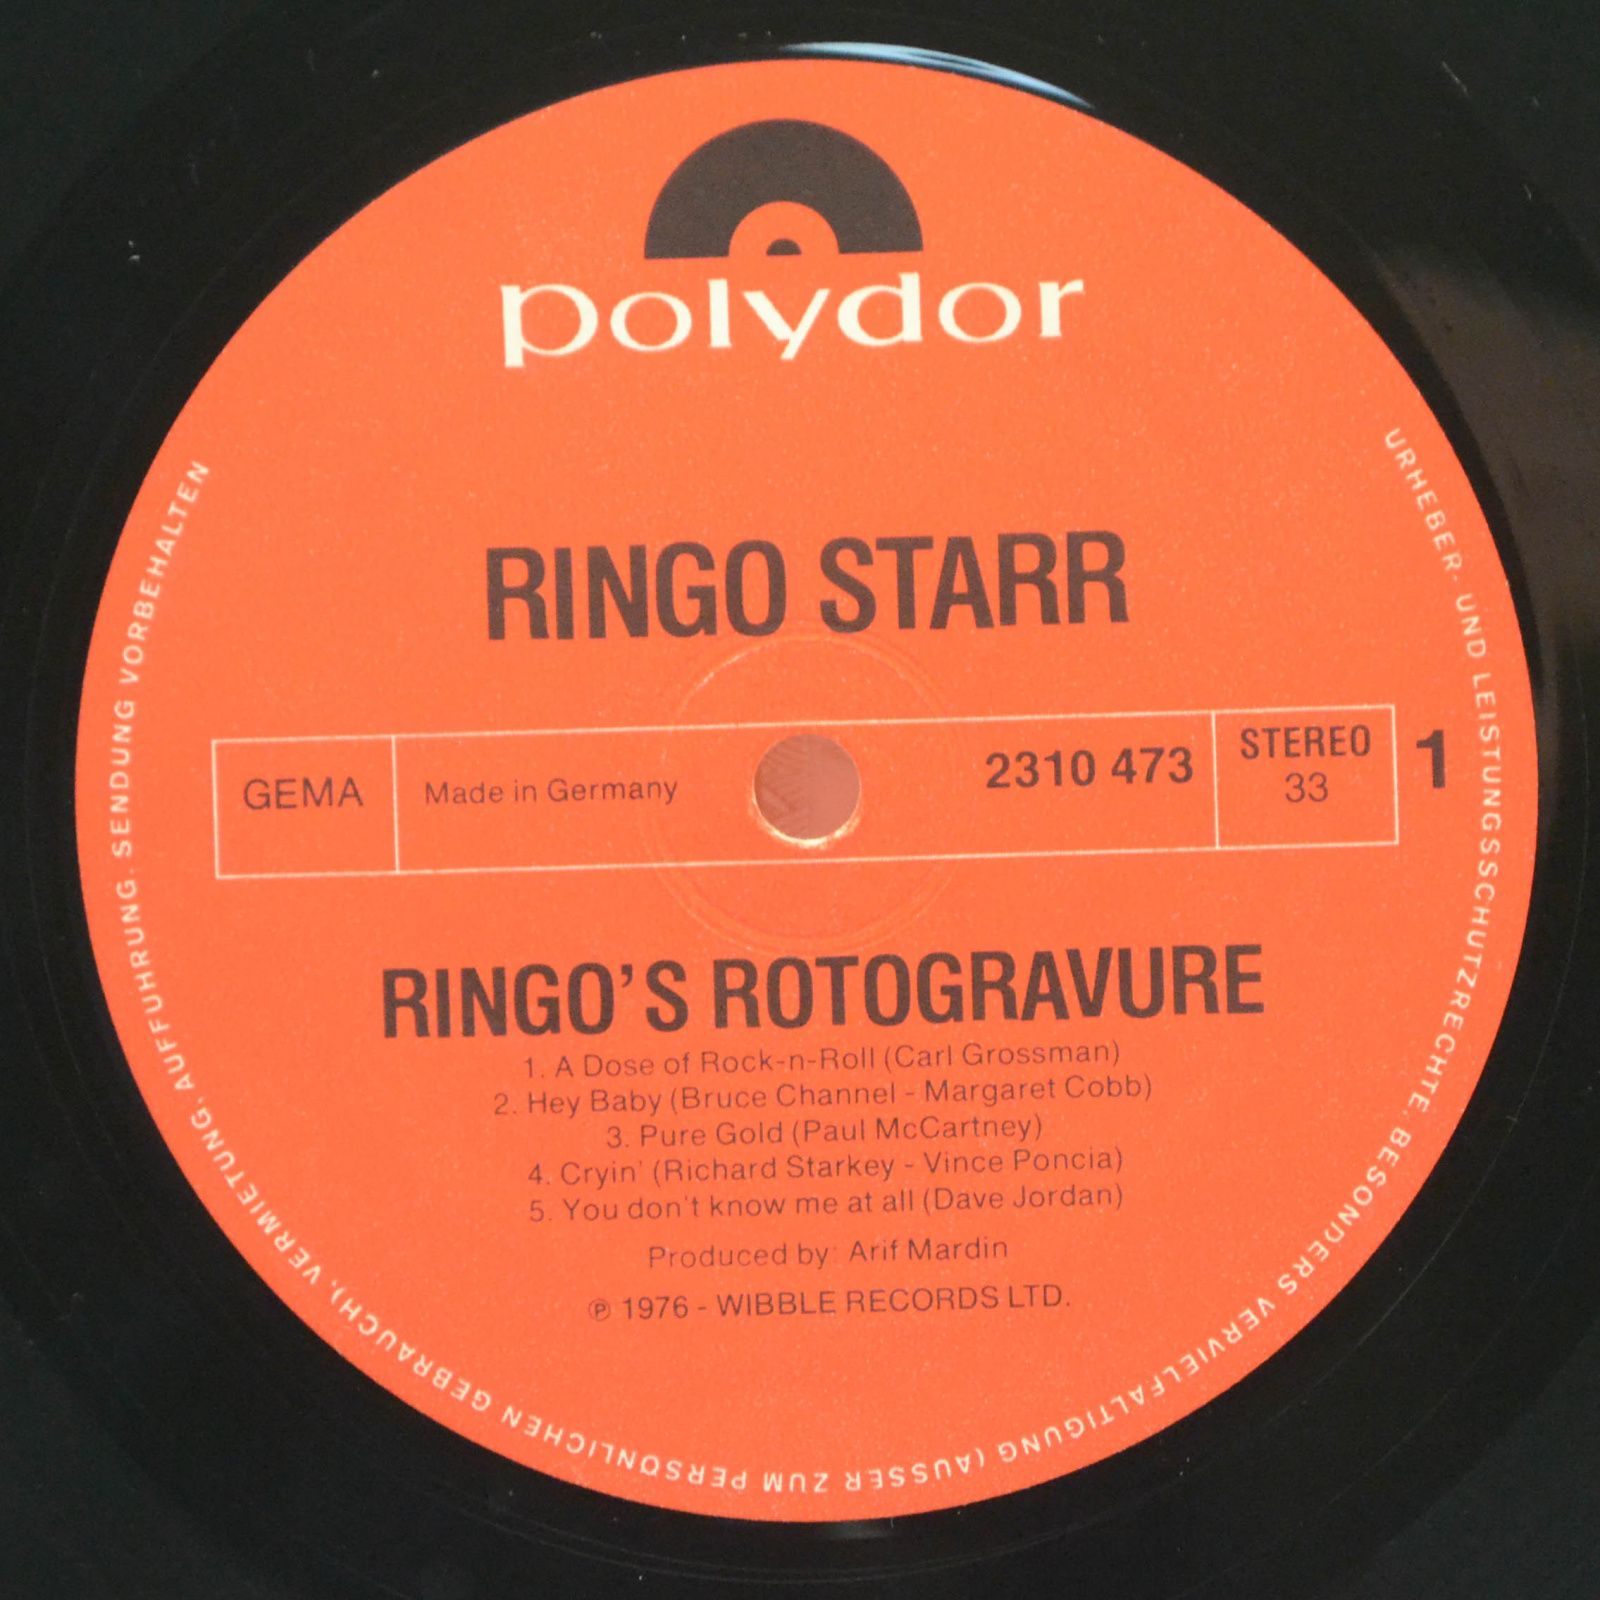 Ringo Starr — Ringo's Rotogravure, 1976